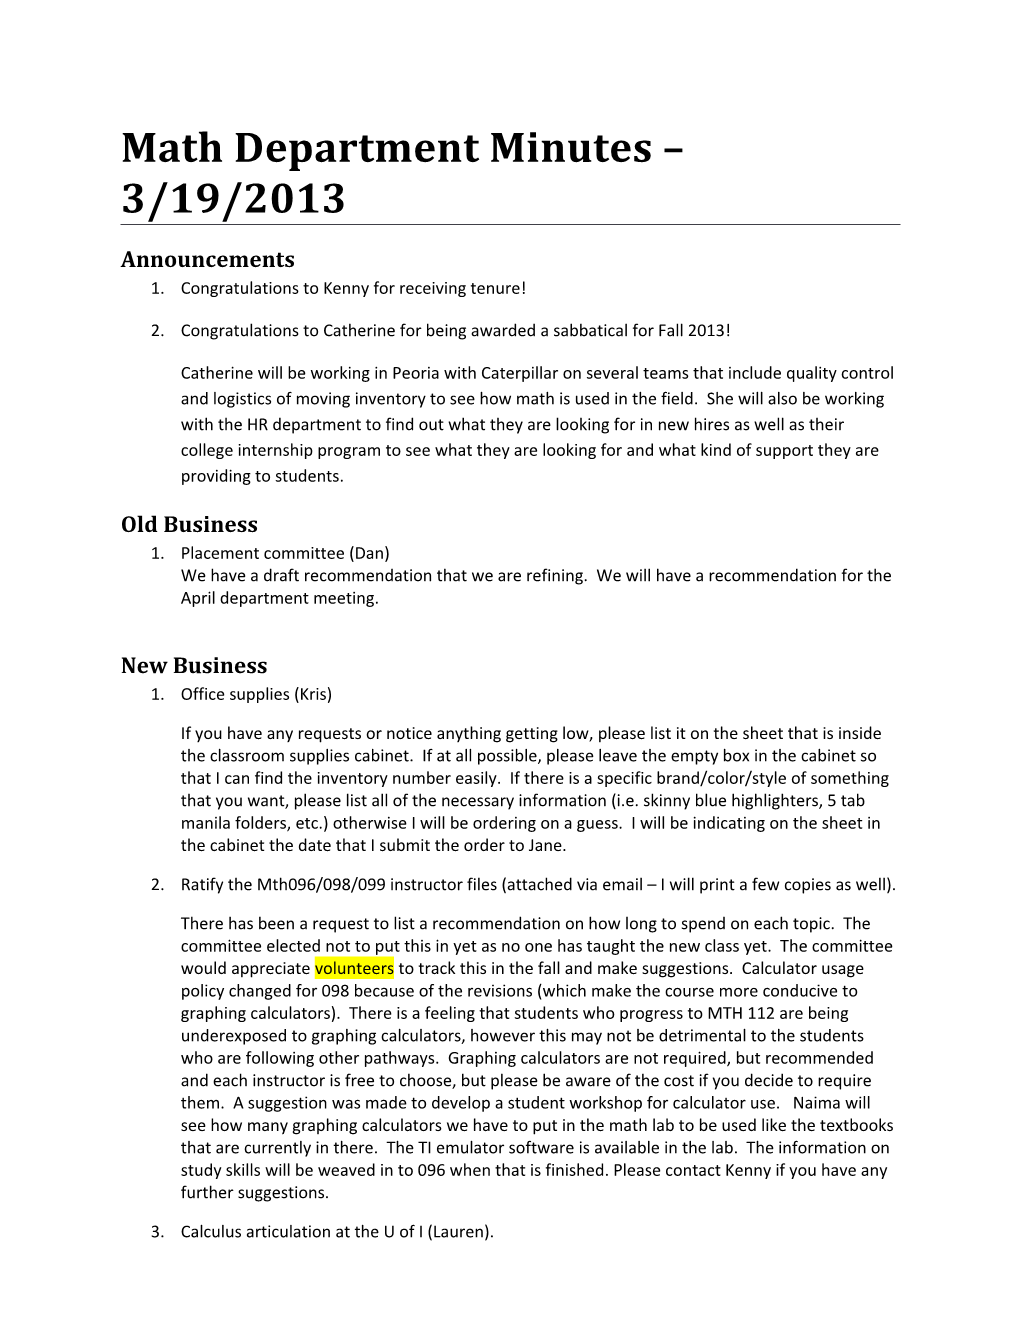 Math Department Minutes 3/19/2013